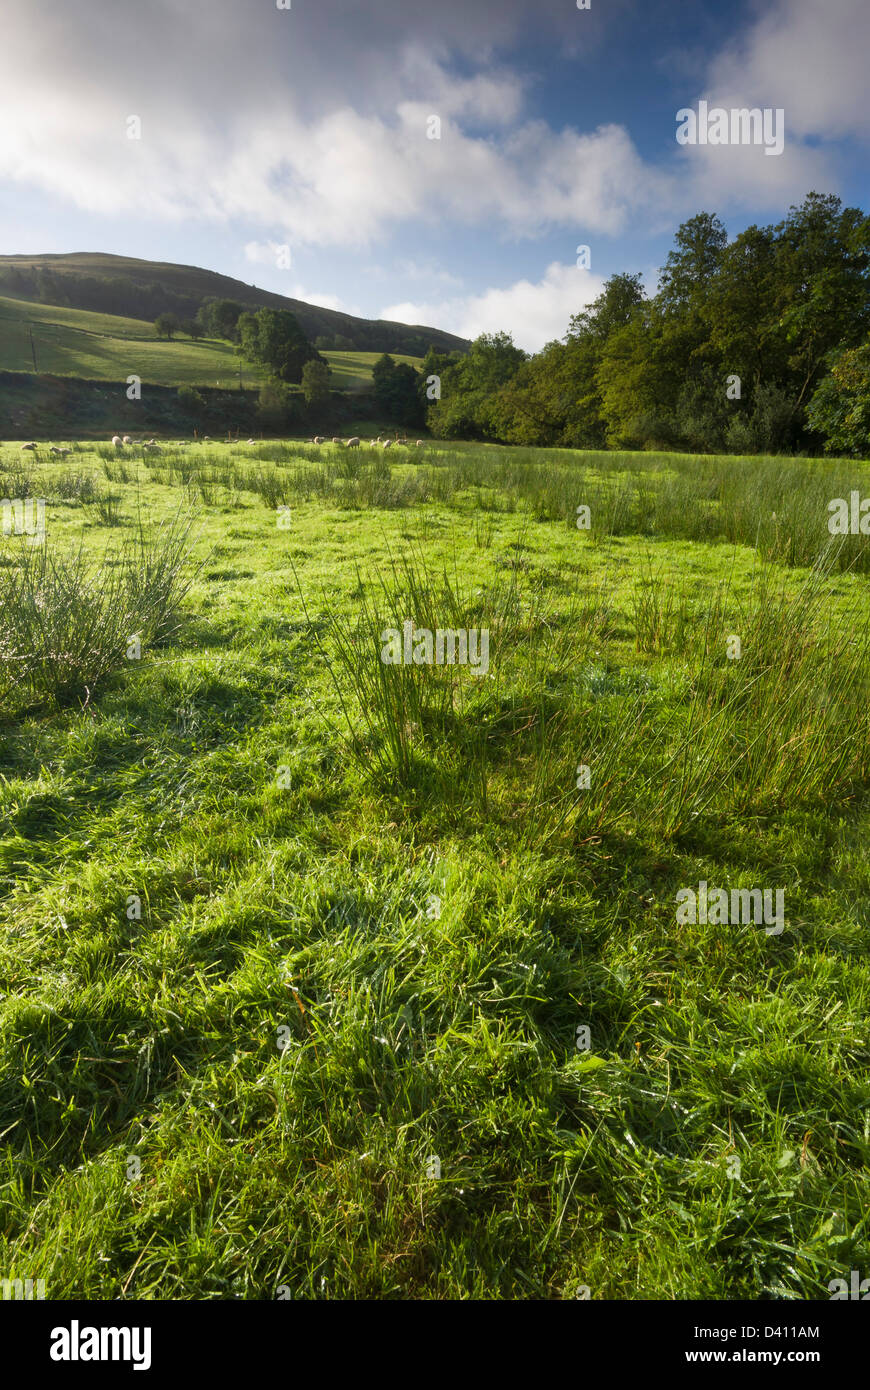 Bright sunshine lighting up a lush green field near to Lake Vyrnwy, Wales Stock Photo